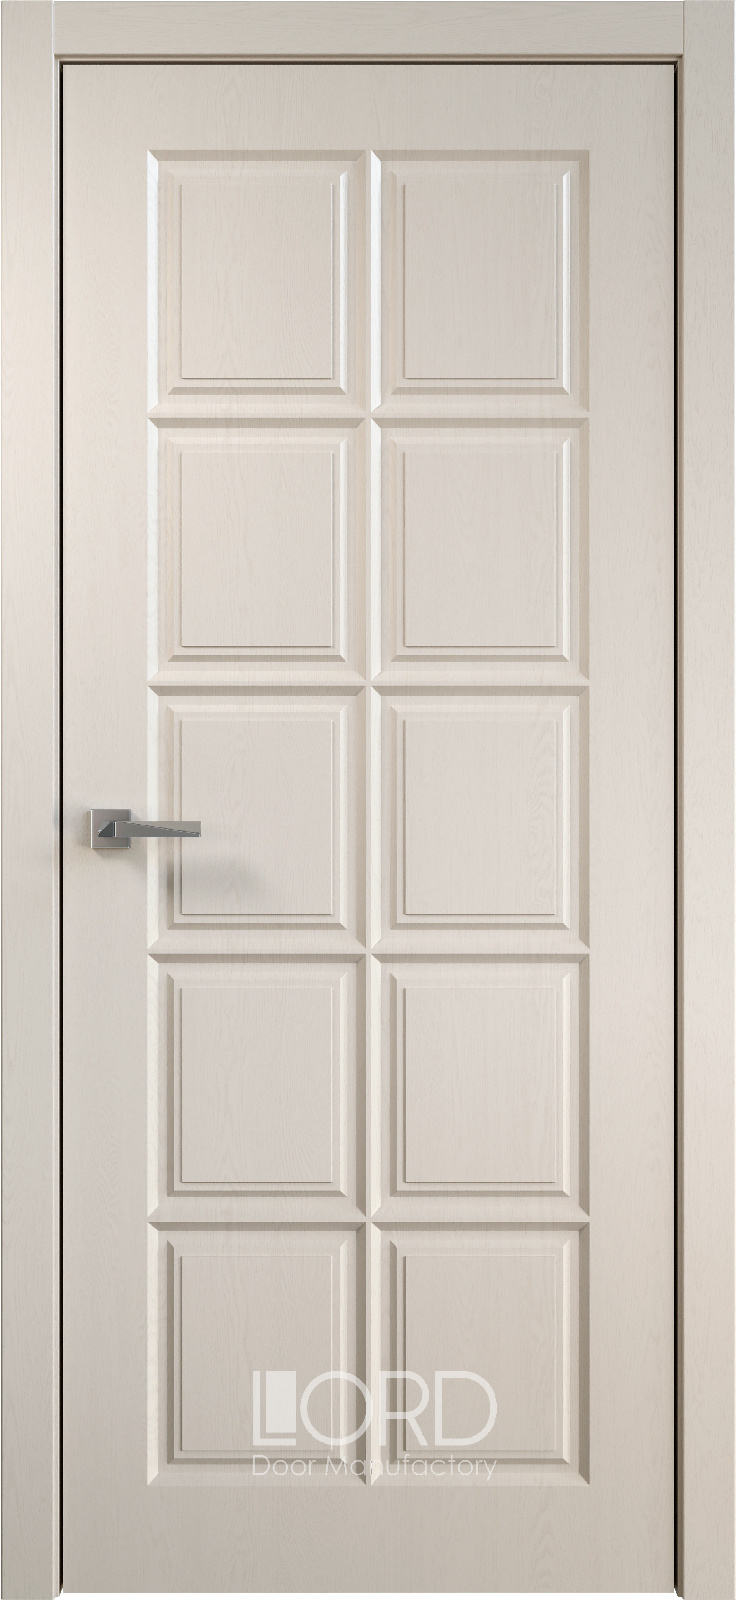 Лорд Межкомнатная дверь K 28 ДГ, арт. 22859 - фото №1